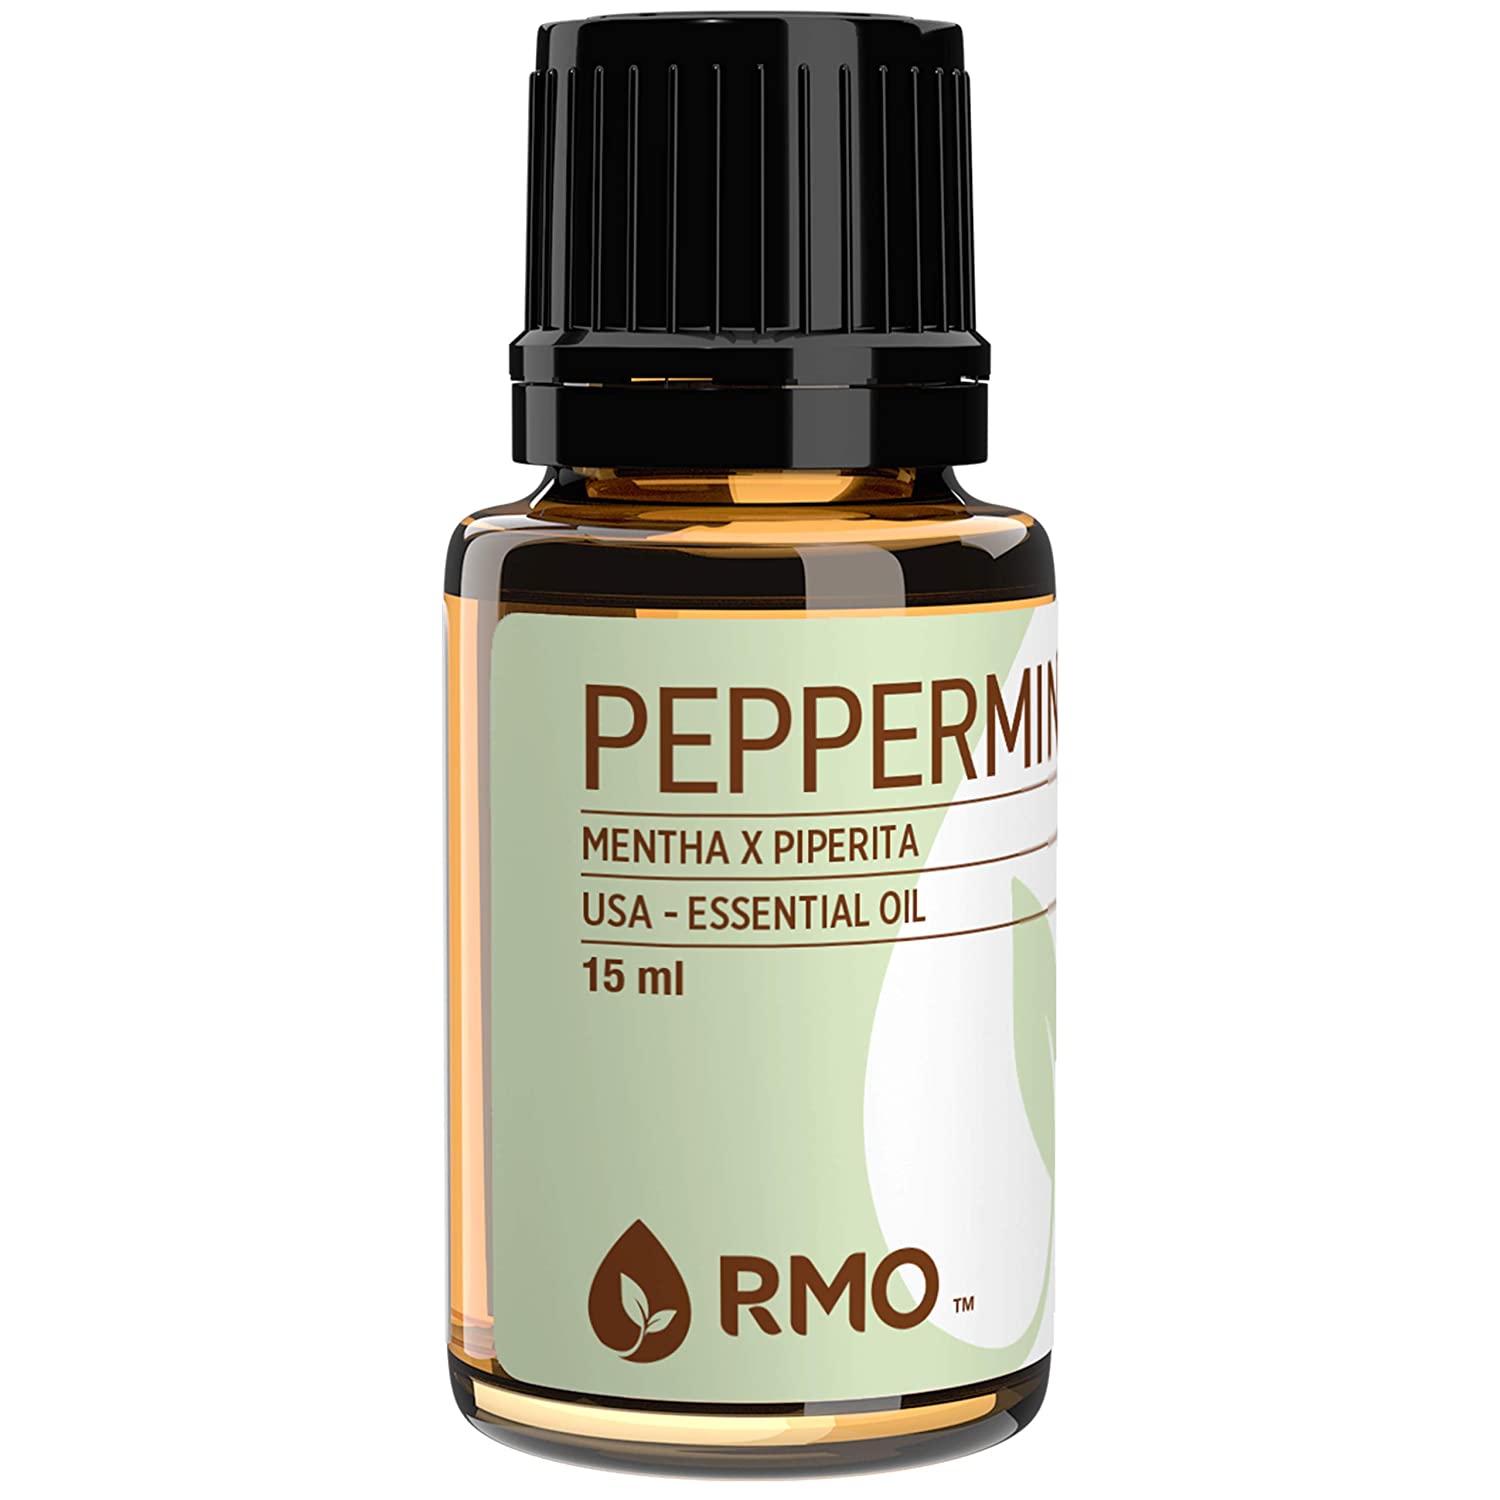 Peppermint Oil Benefits